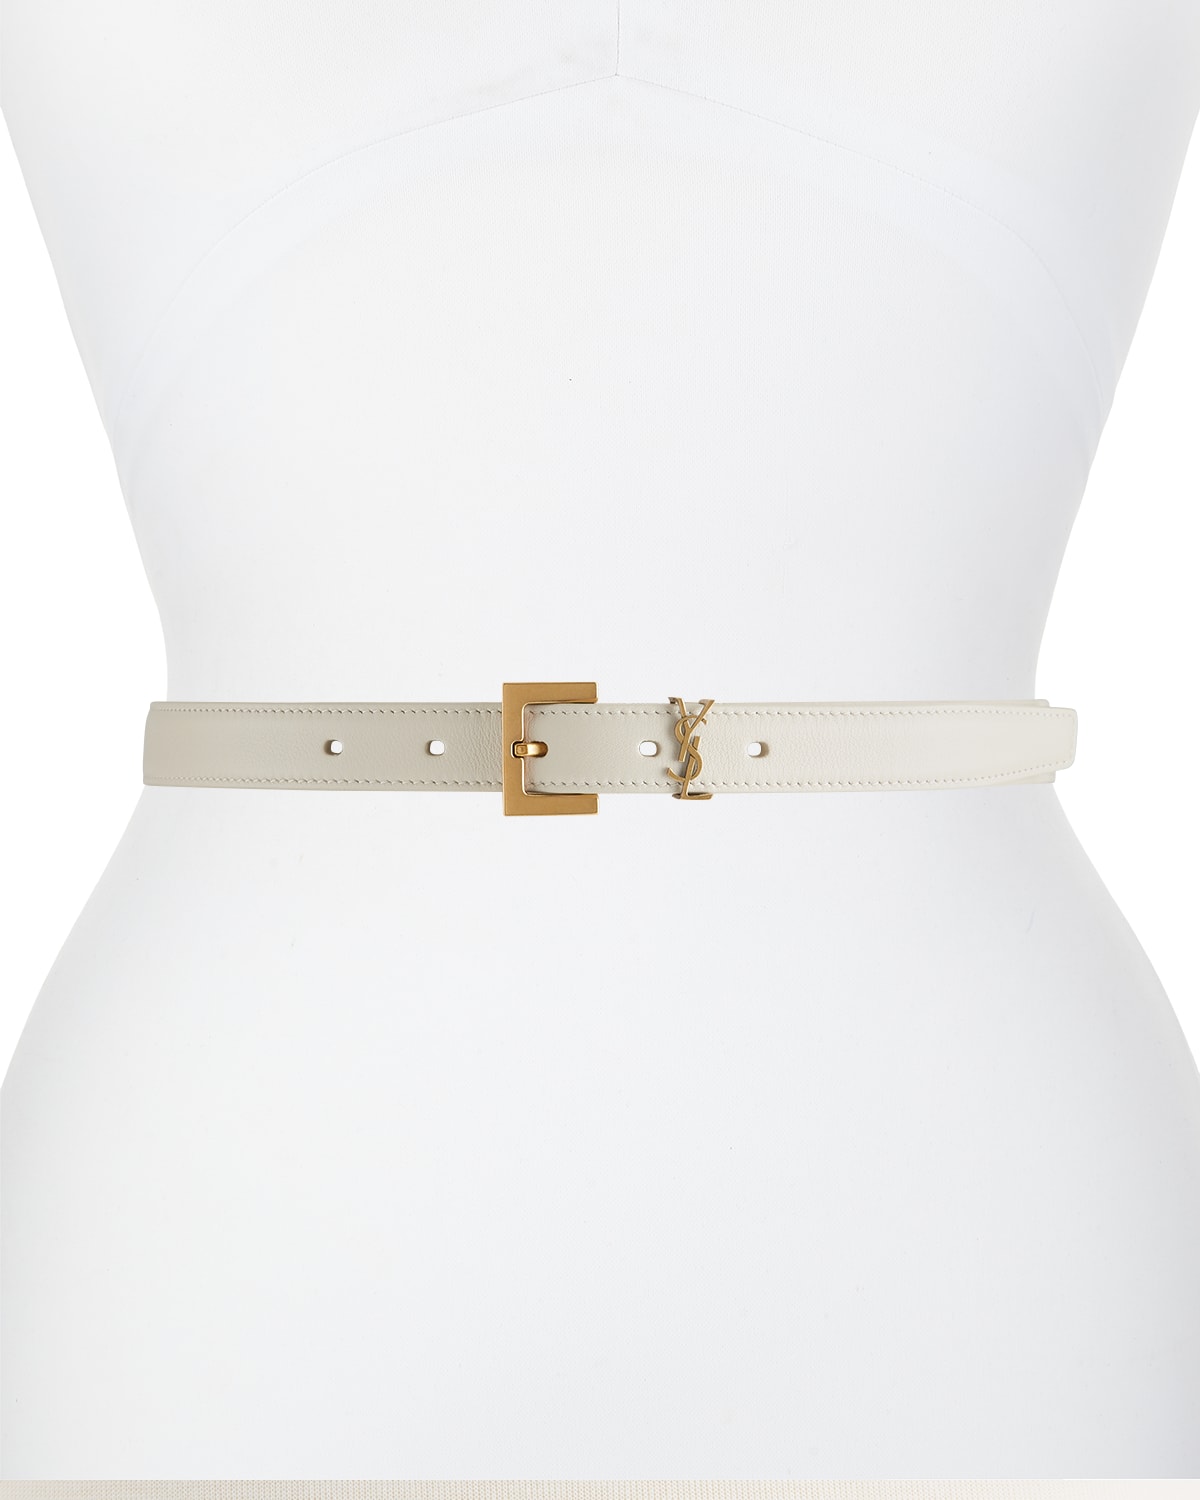 Ysl Monogram Leather Belt In Cream / Bronze